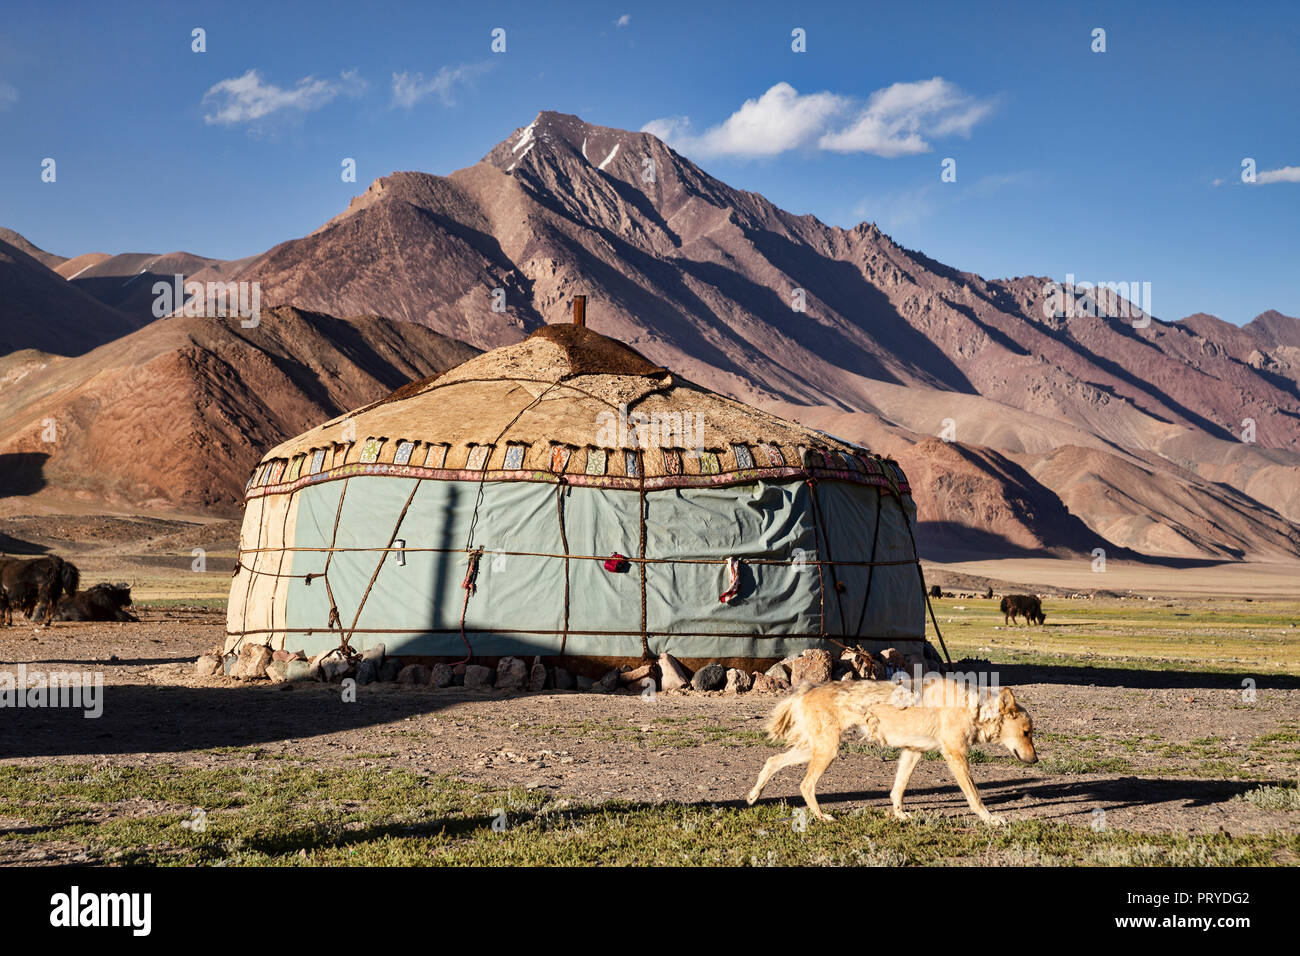 Pamir mountain dog walks in front of Kyrgyz yurt in the remote Pshart Valley in the Pamir Mountains, Gorno-Badakhshan Autonomous Region, Tajikistan. Stock Photo